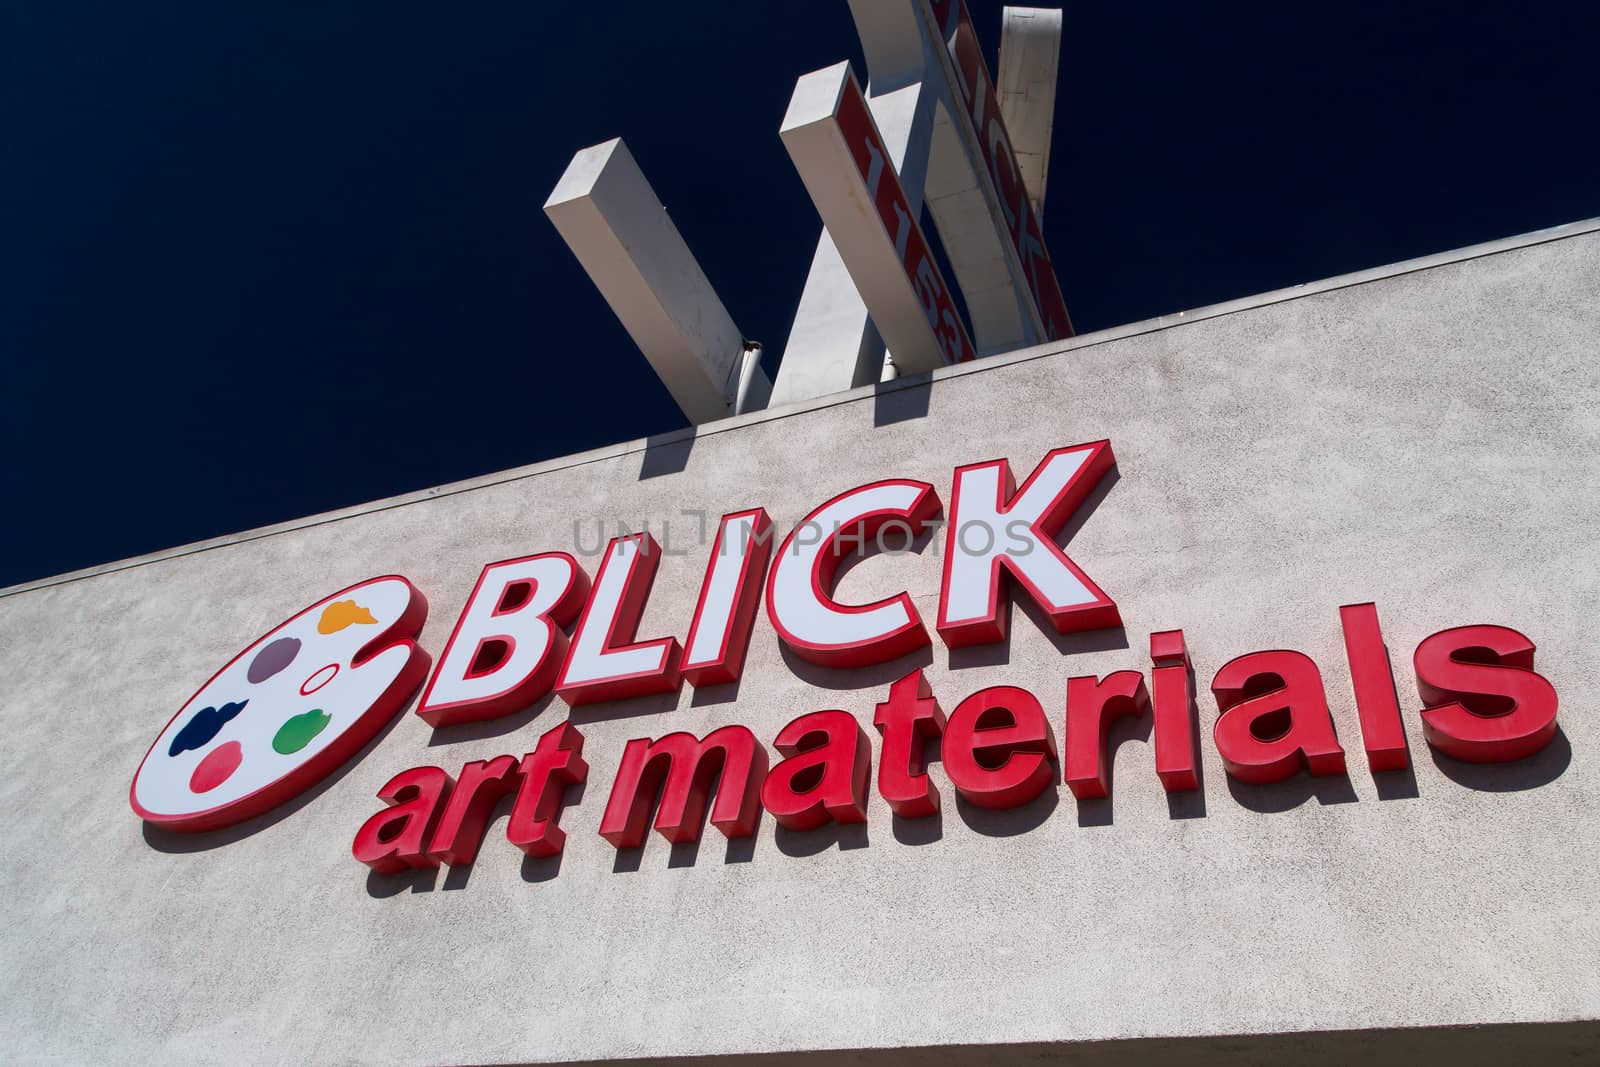 Blick Art Supplies Exterior and Logo by wolterk